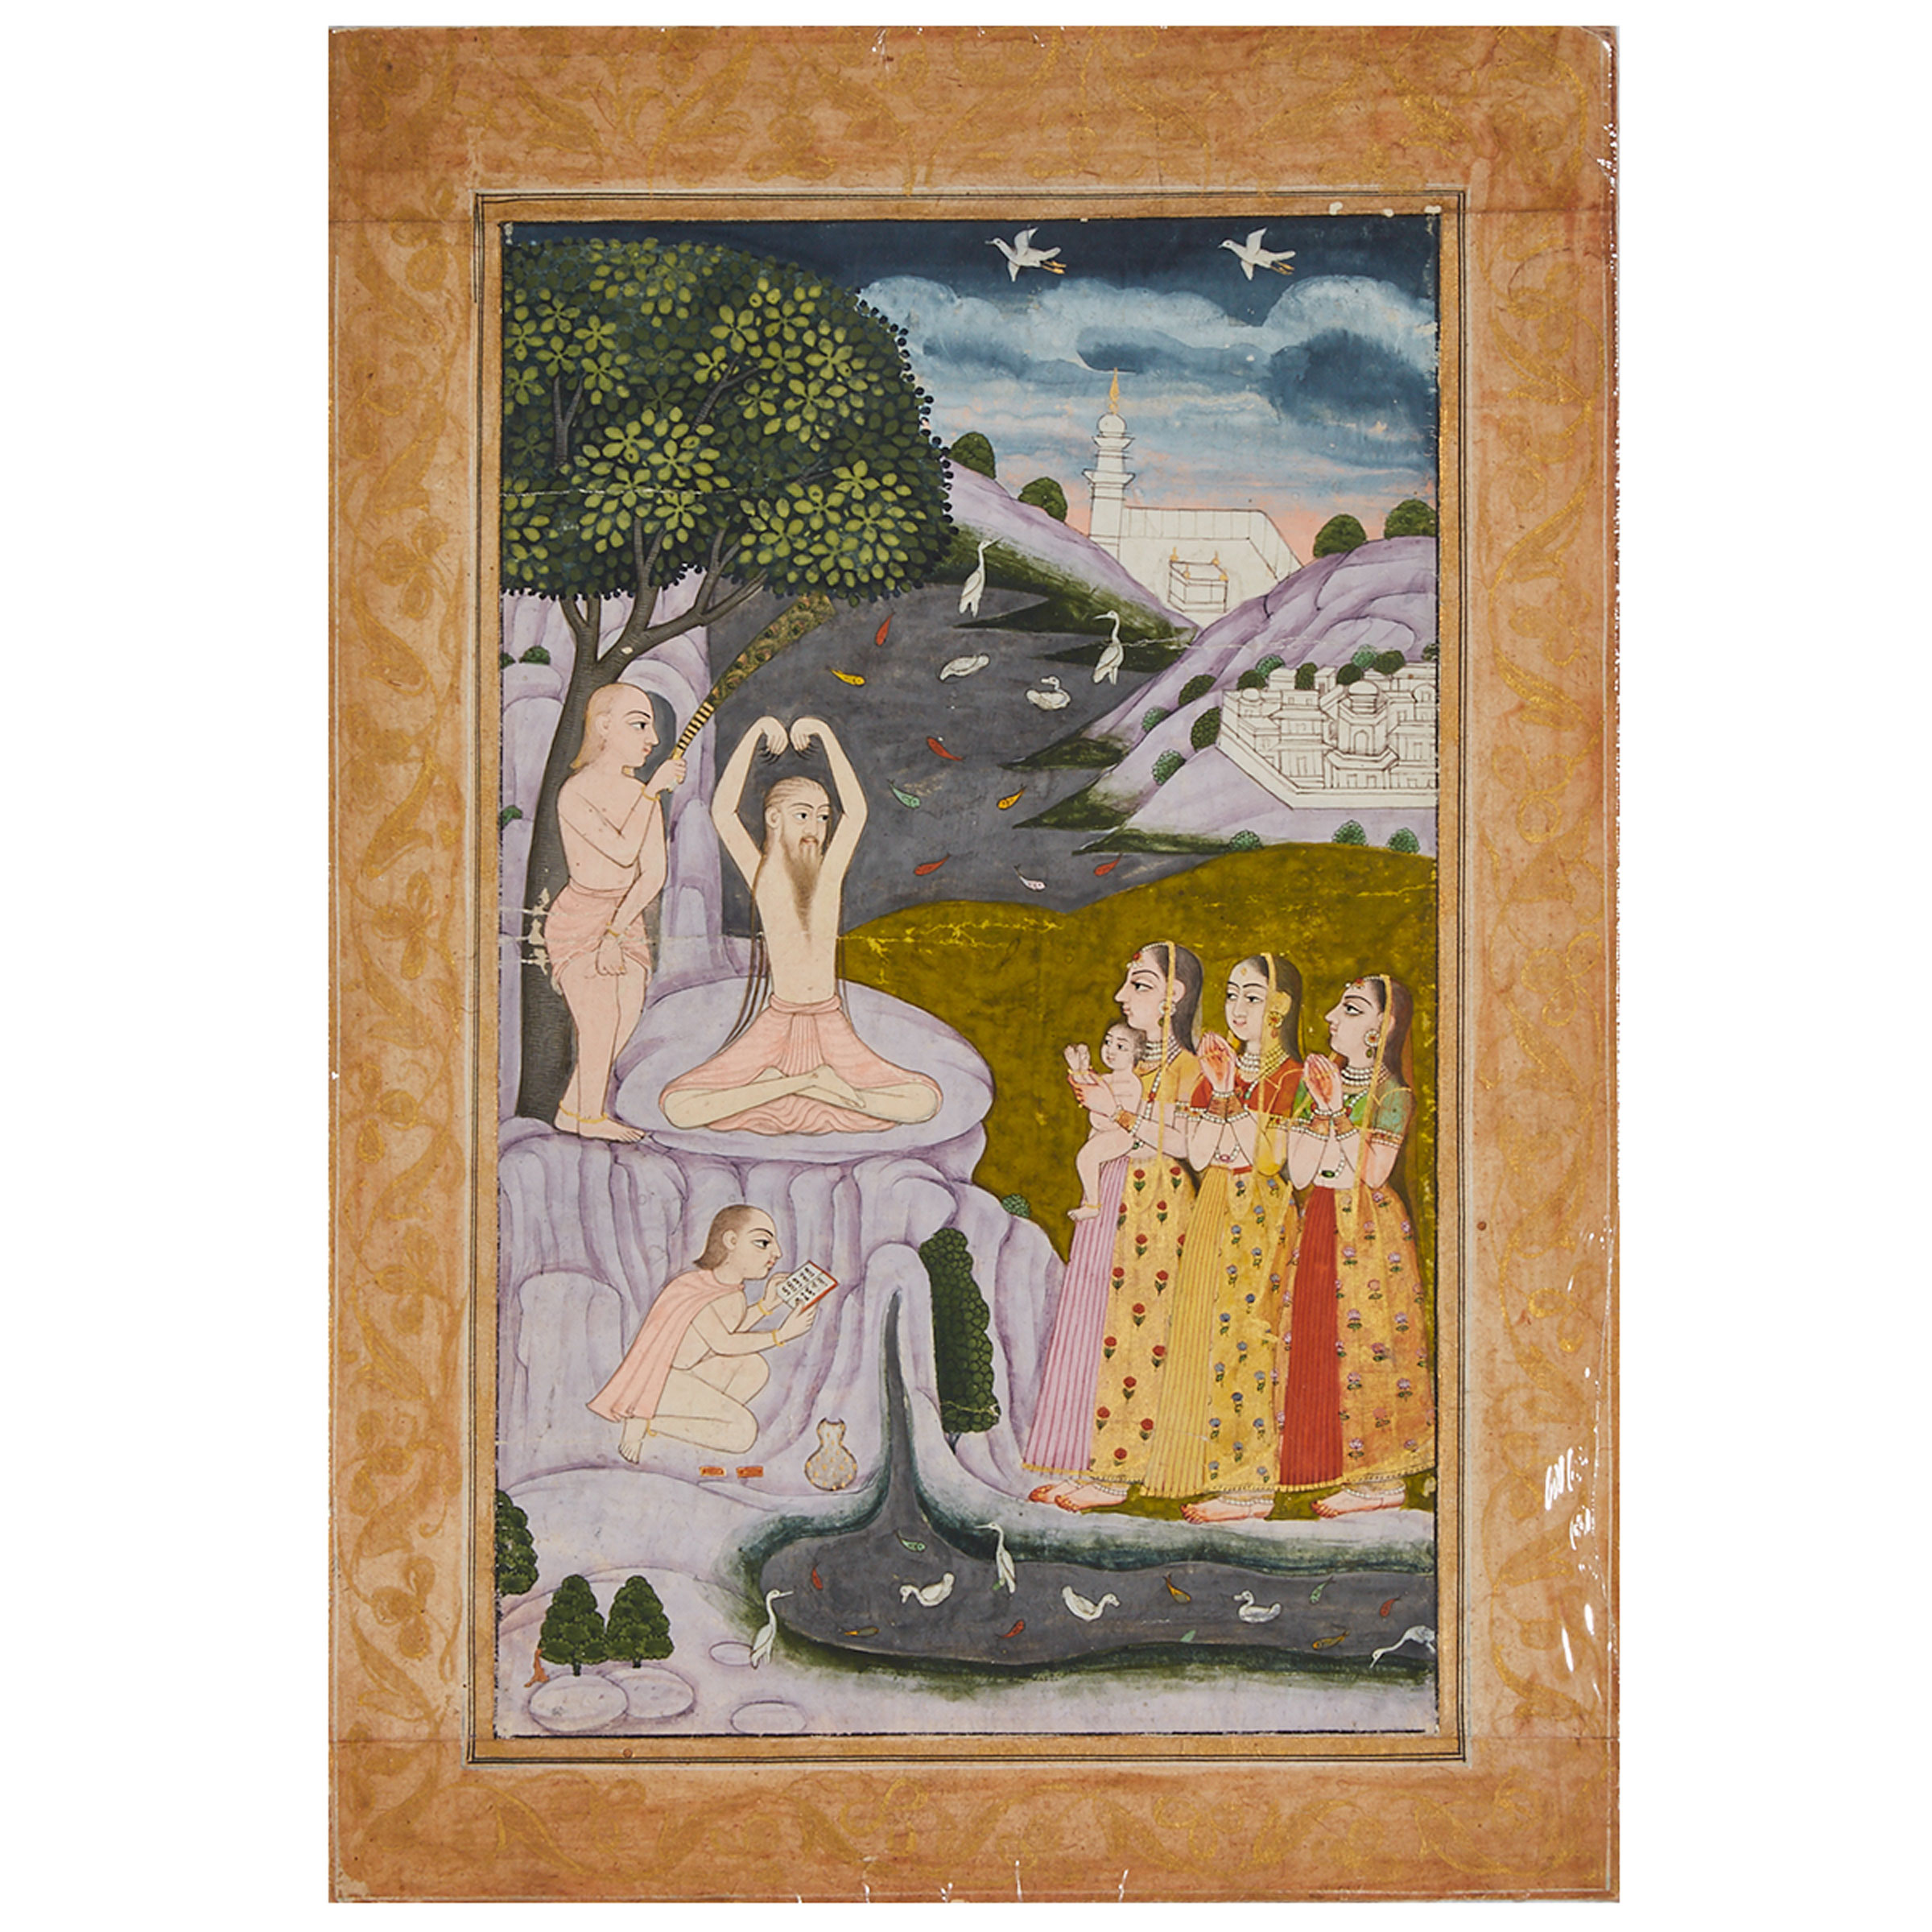 A Miniature Painting of Sadhu Holy Men, North India, Circa 1800